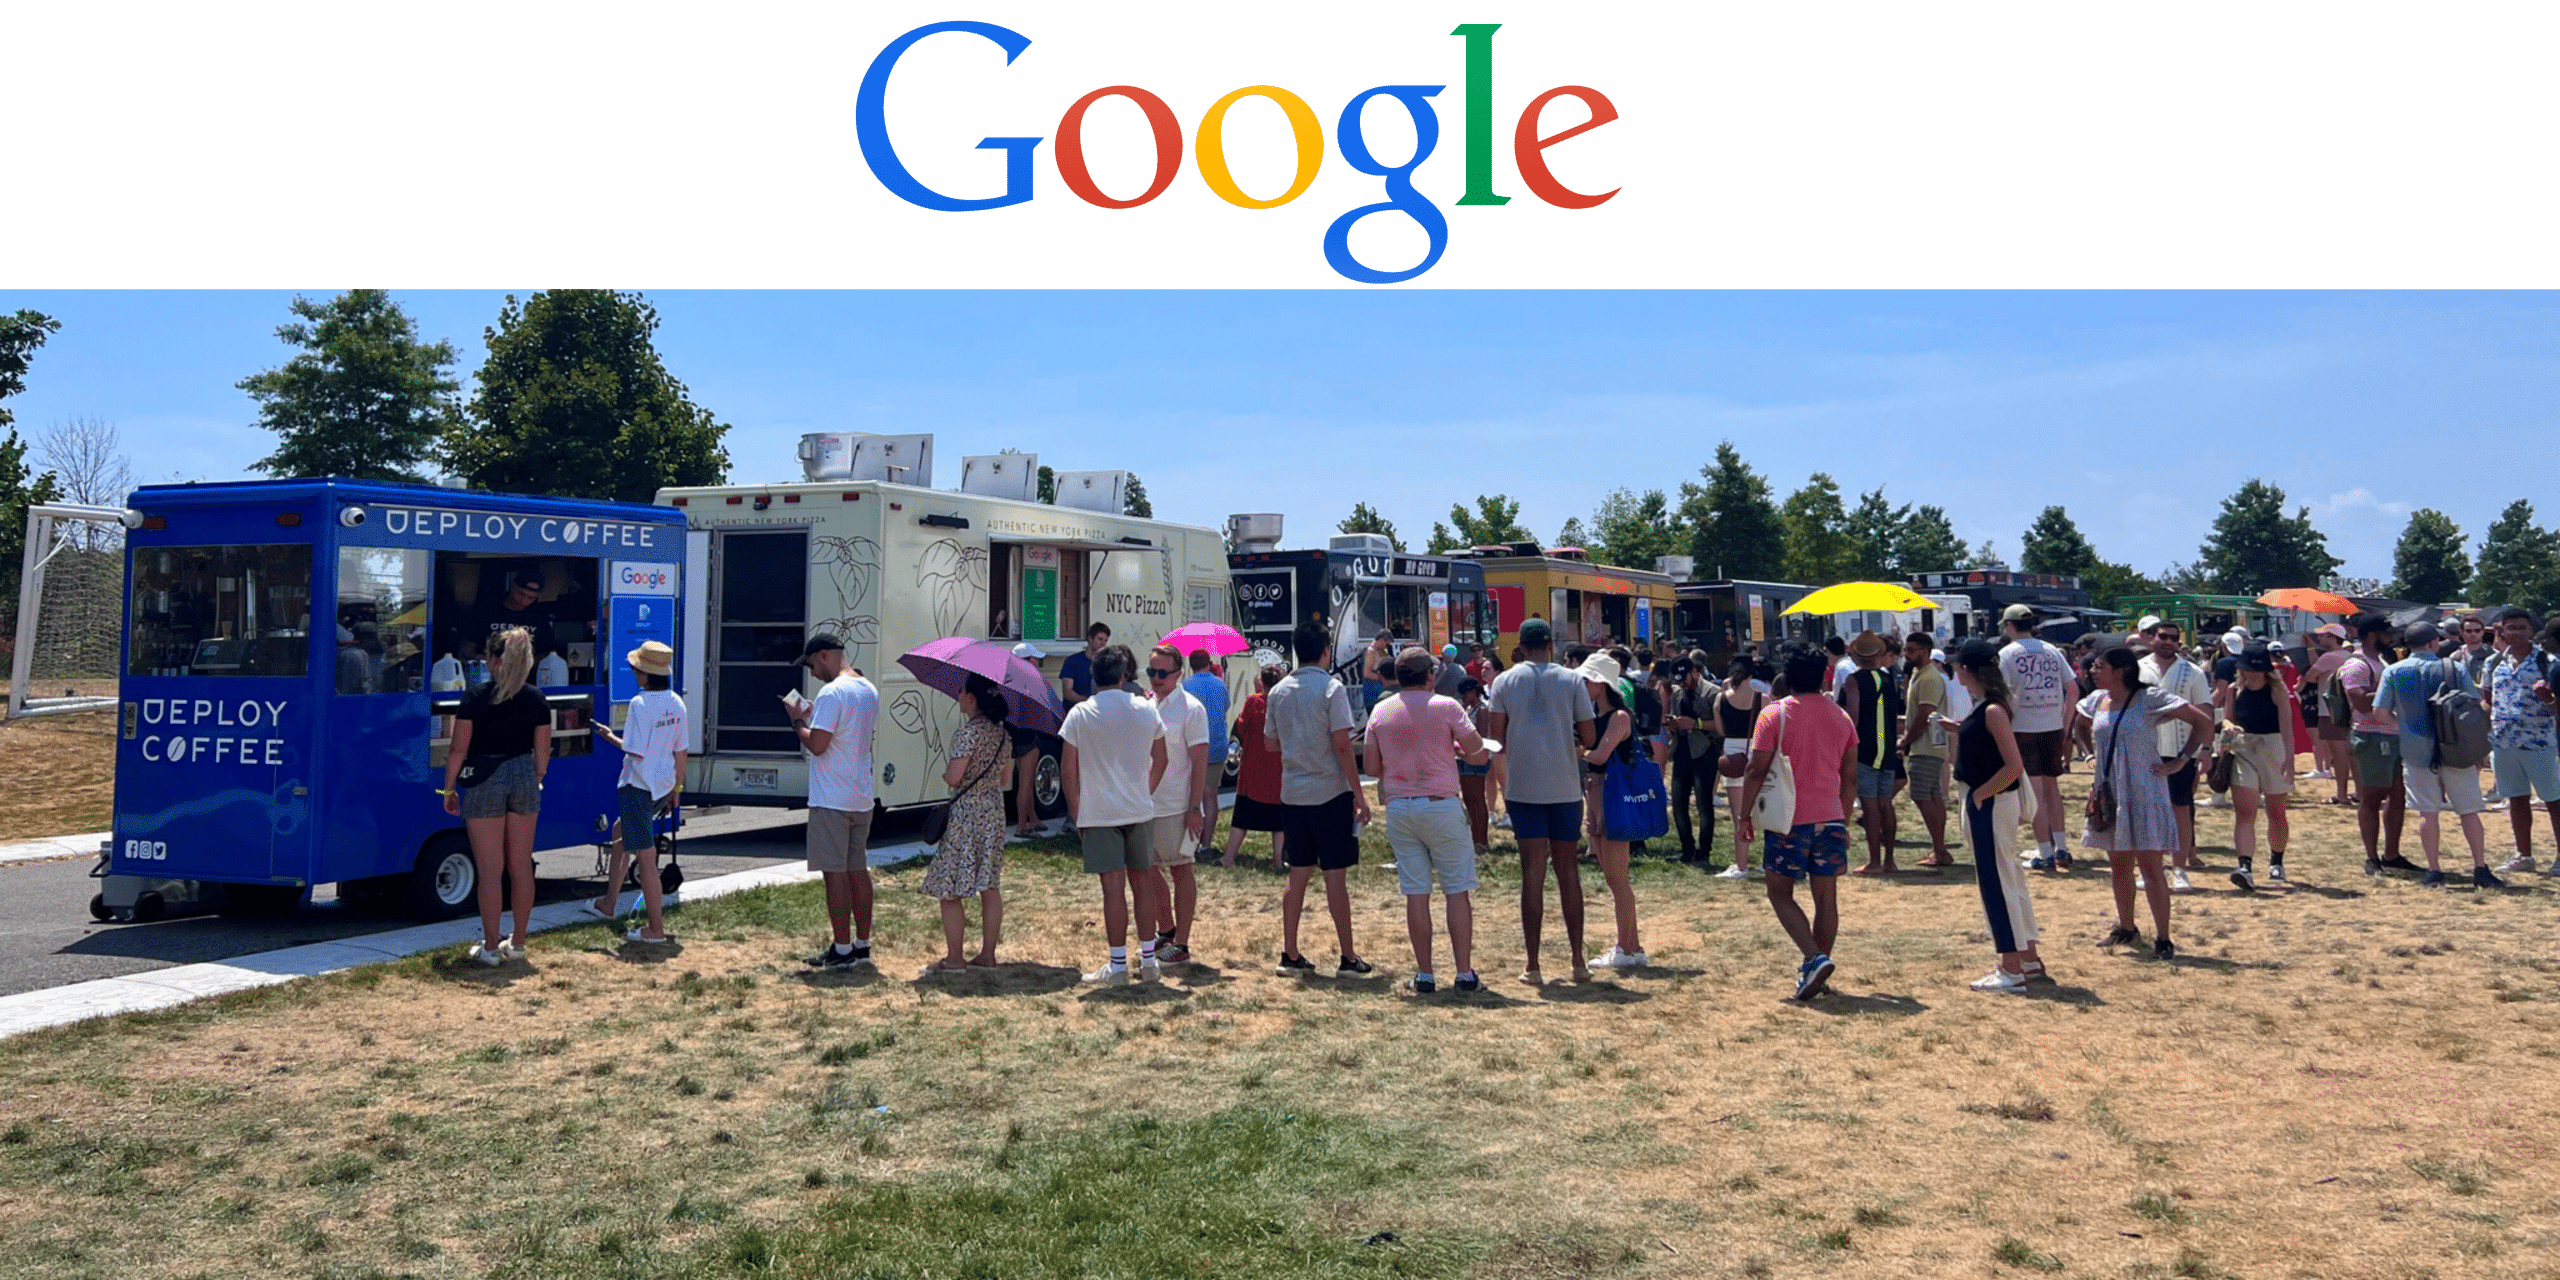 Google employee appreciation event